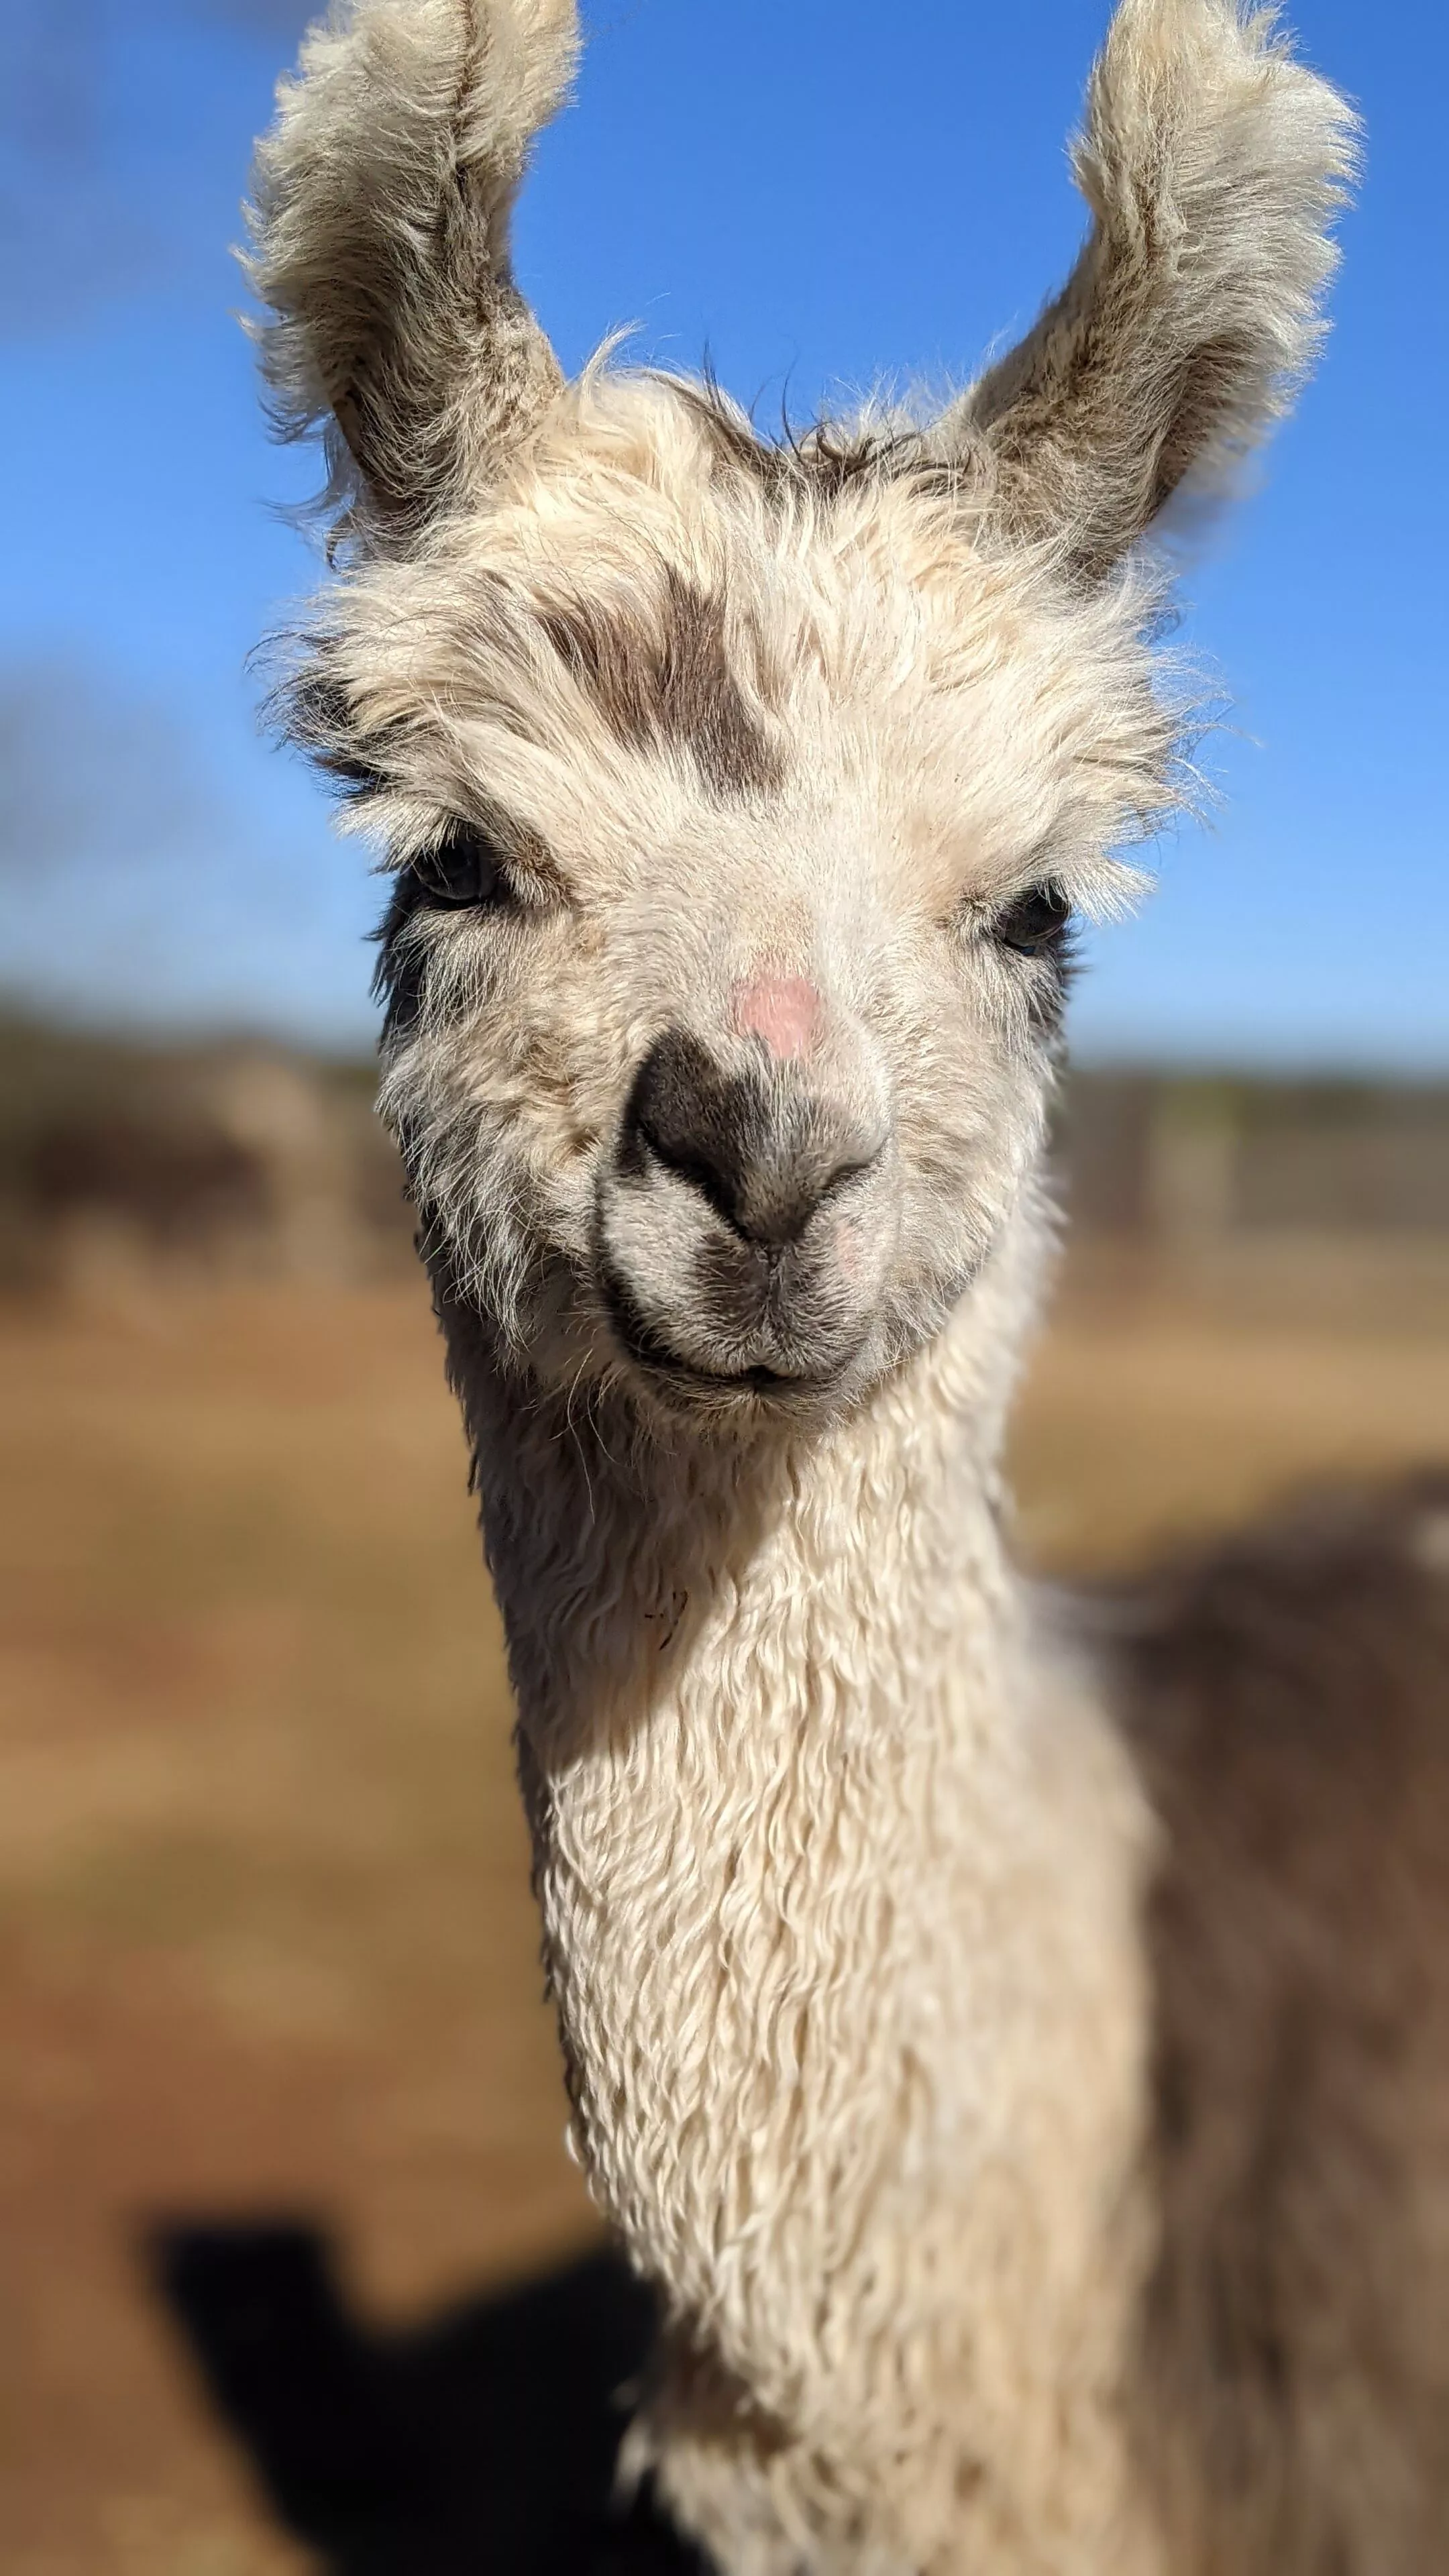 A portrait image of a llama named Flemming